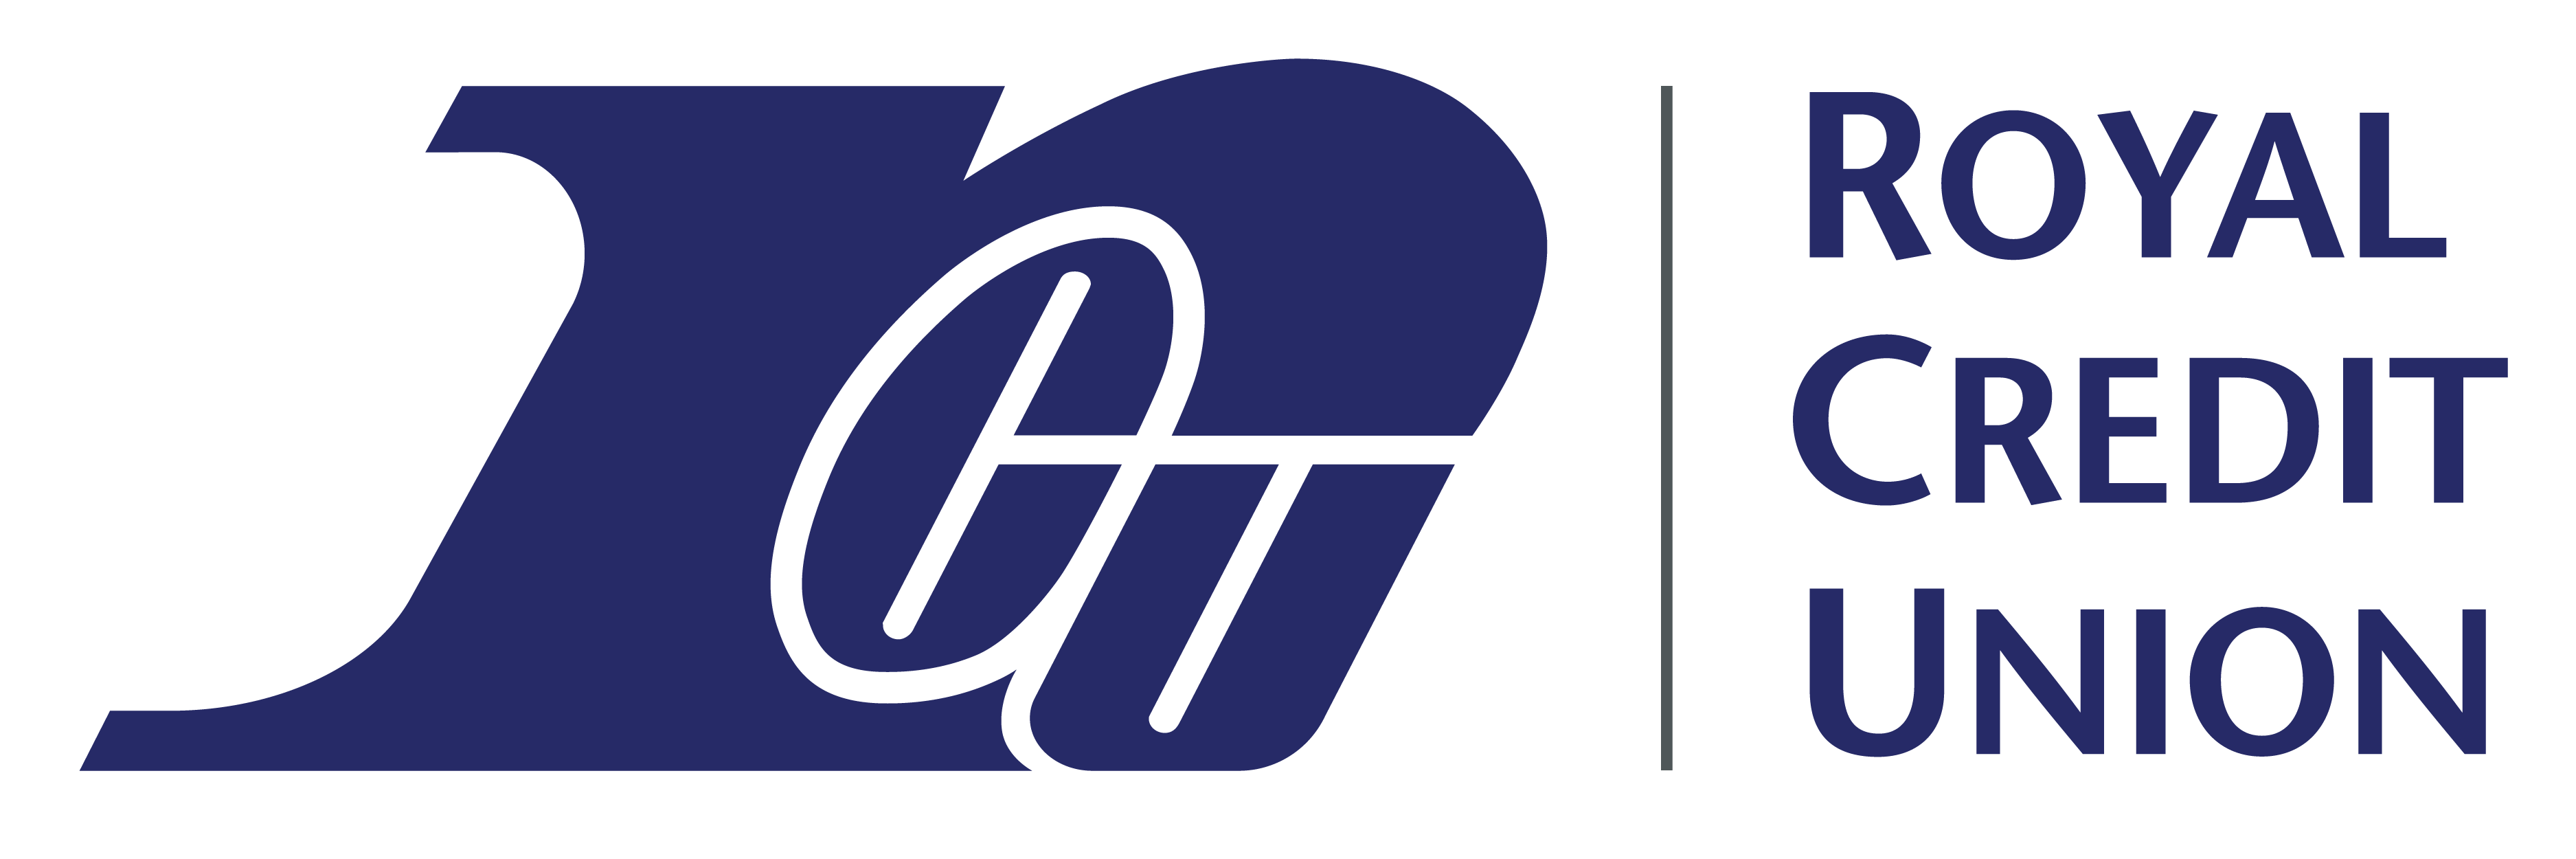 Royal Credit Union - Full Color S-Logo (2)